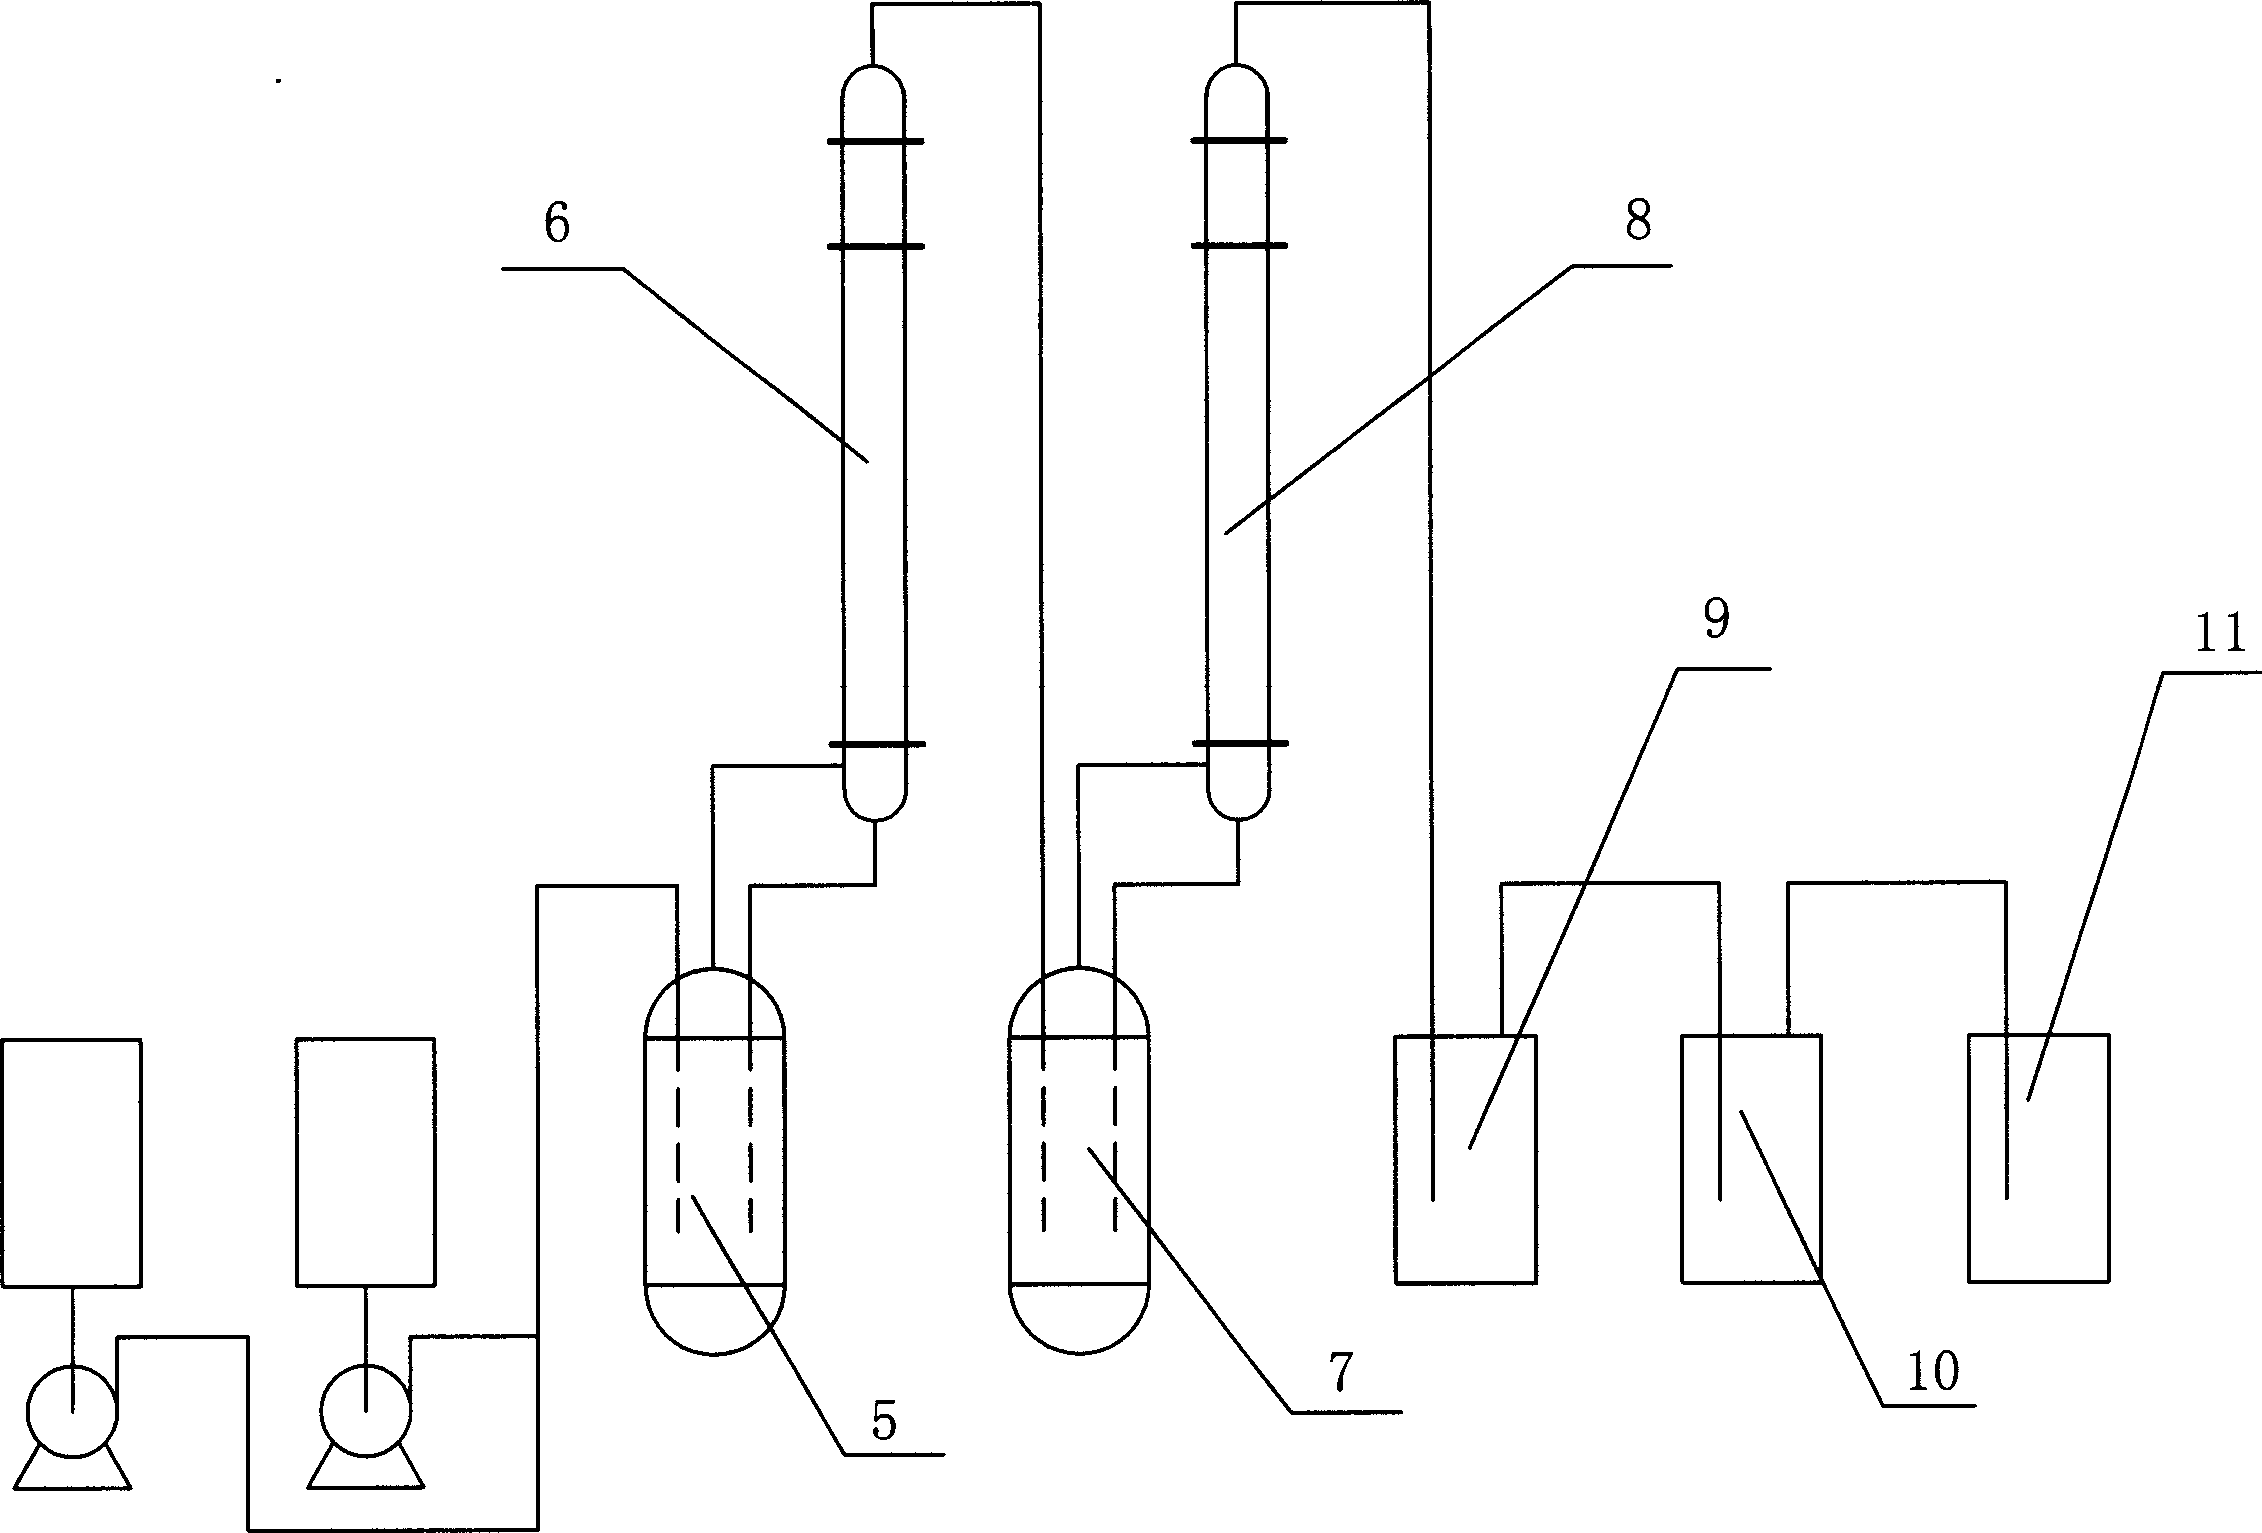 Process for preparing 1, 1, 1-trifluoroethane and 1, 1, 1-difluorochloroethane